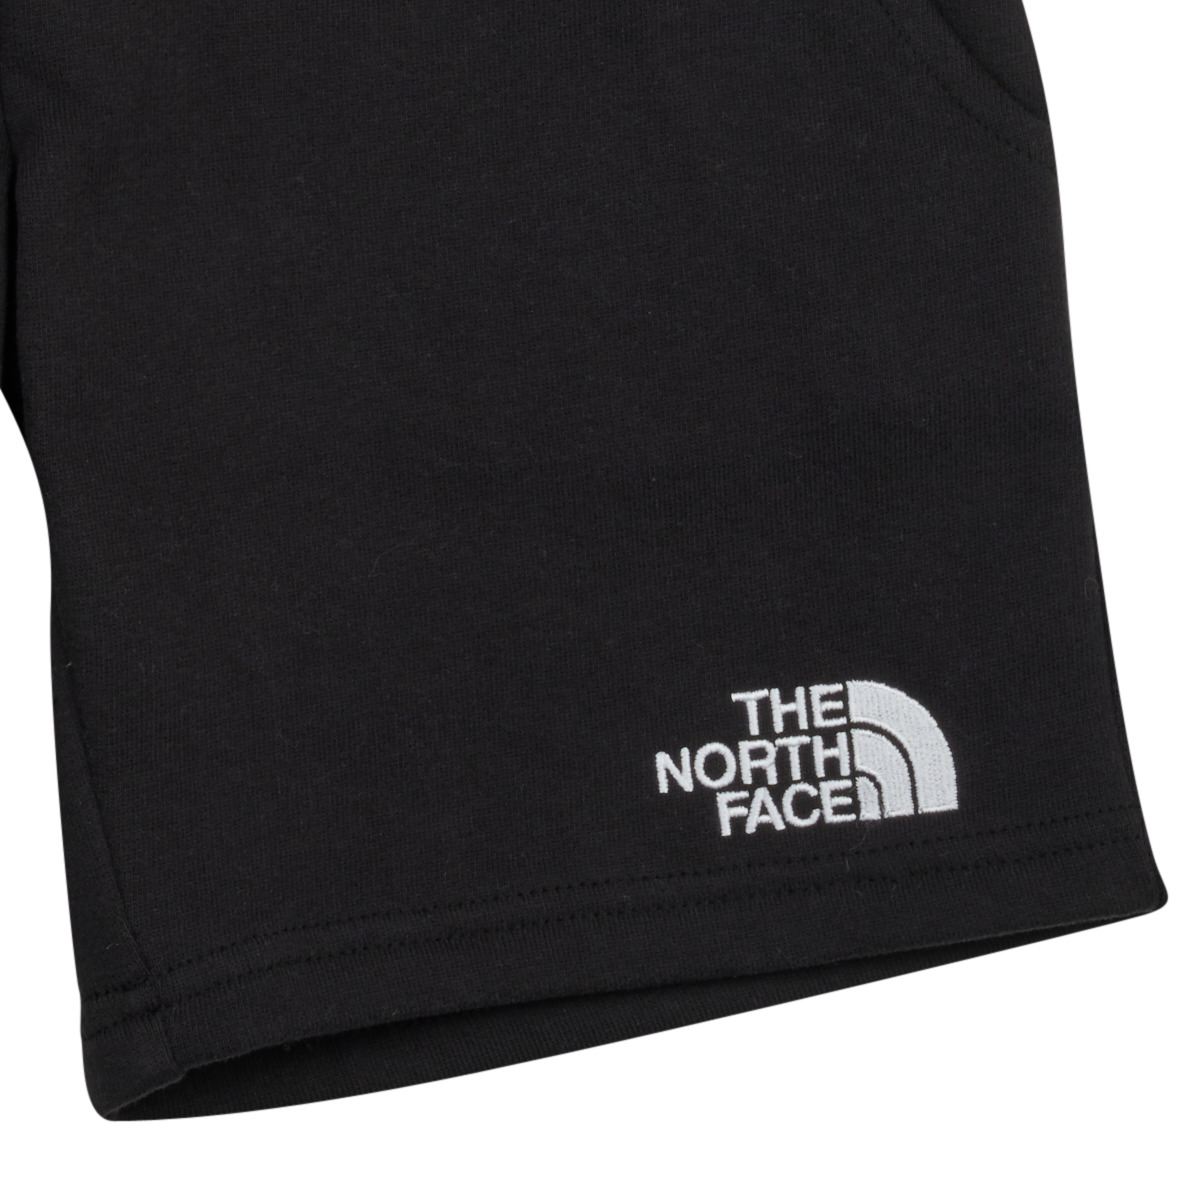 The North Face Noir B COTTON SHORTS TNF BLACK vJys5g2f